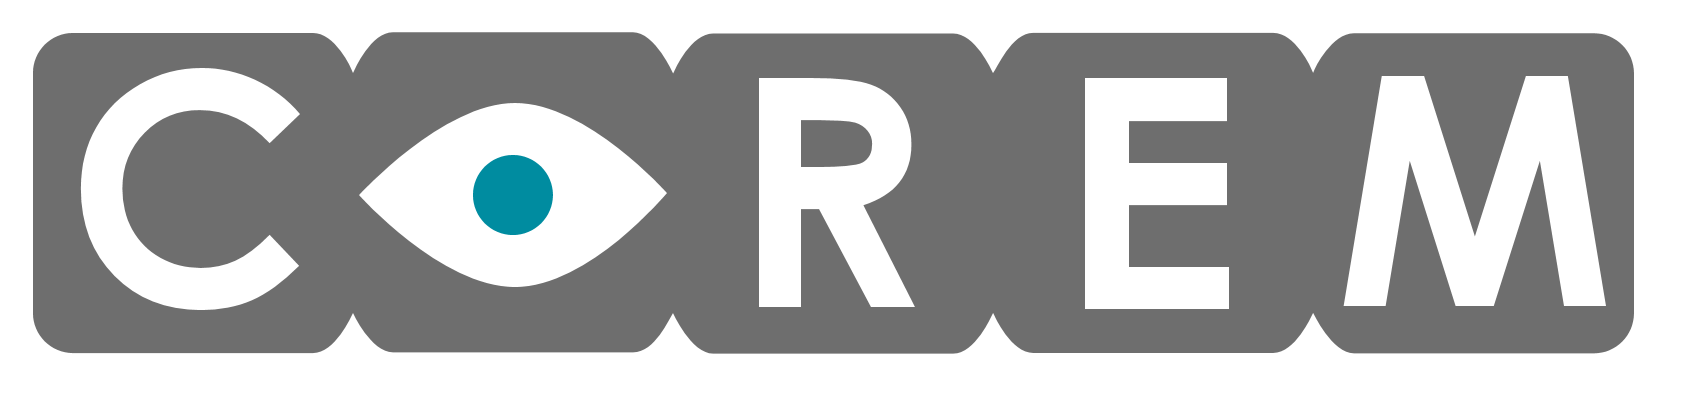 COREM logo